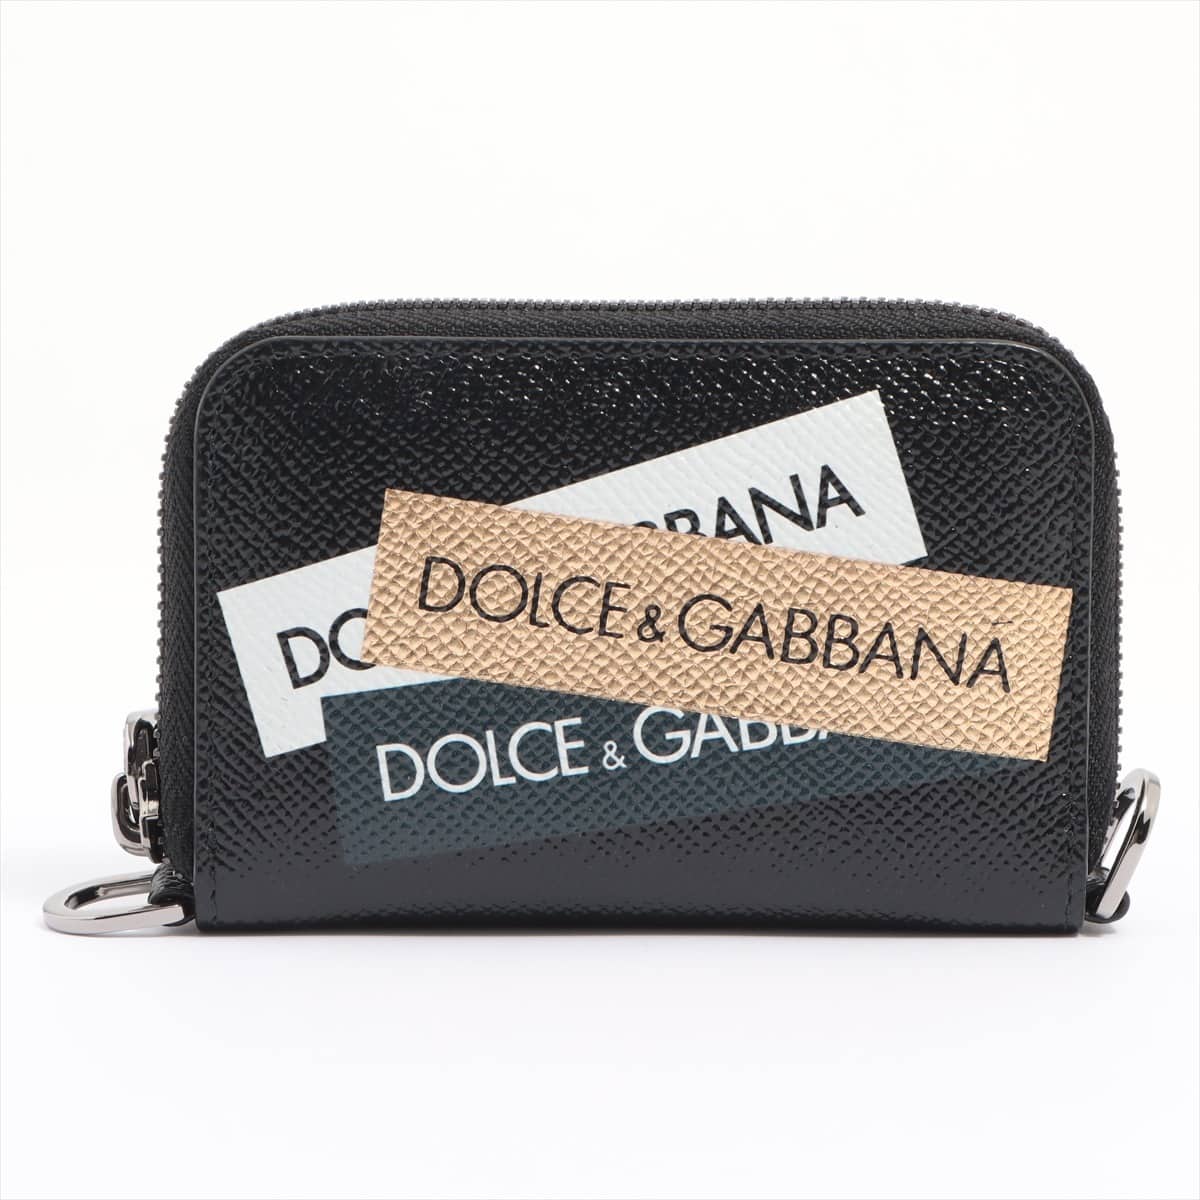 Dolce & Gabbana Leather Coin case Black